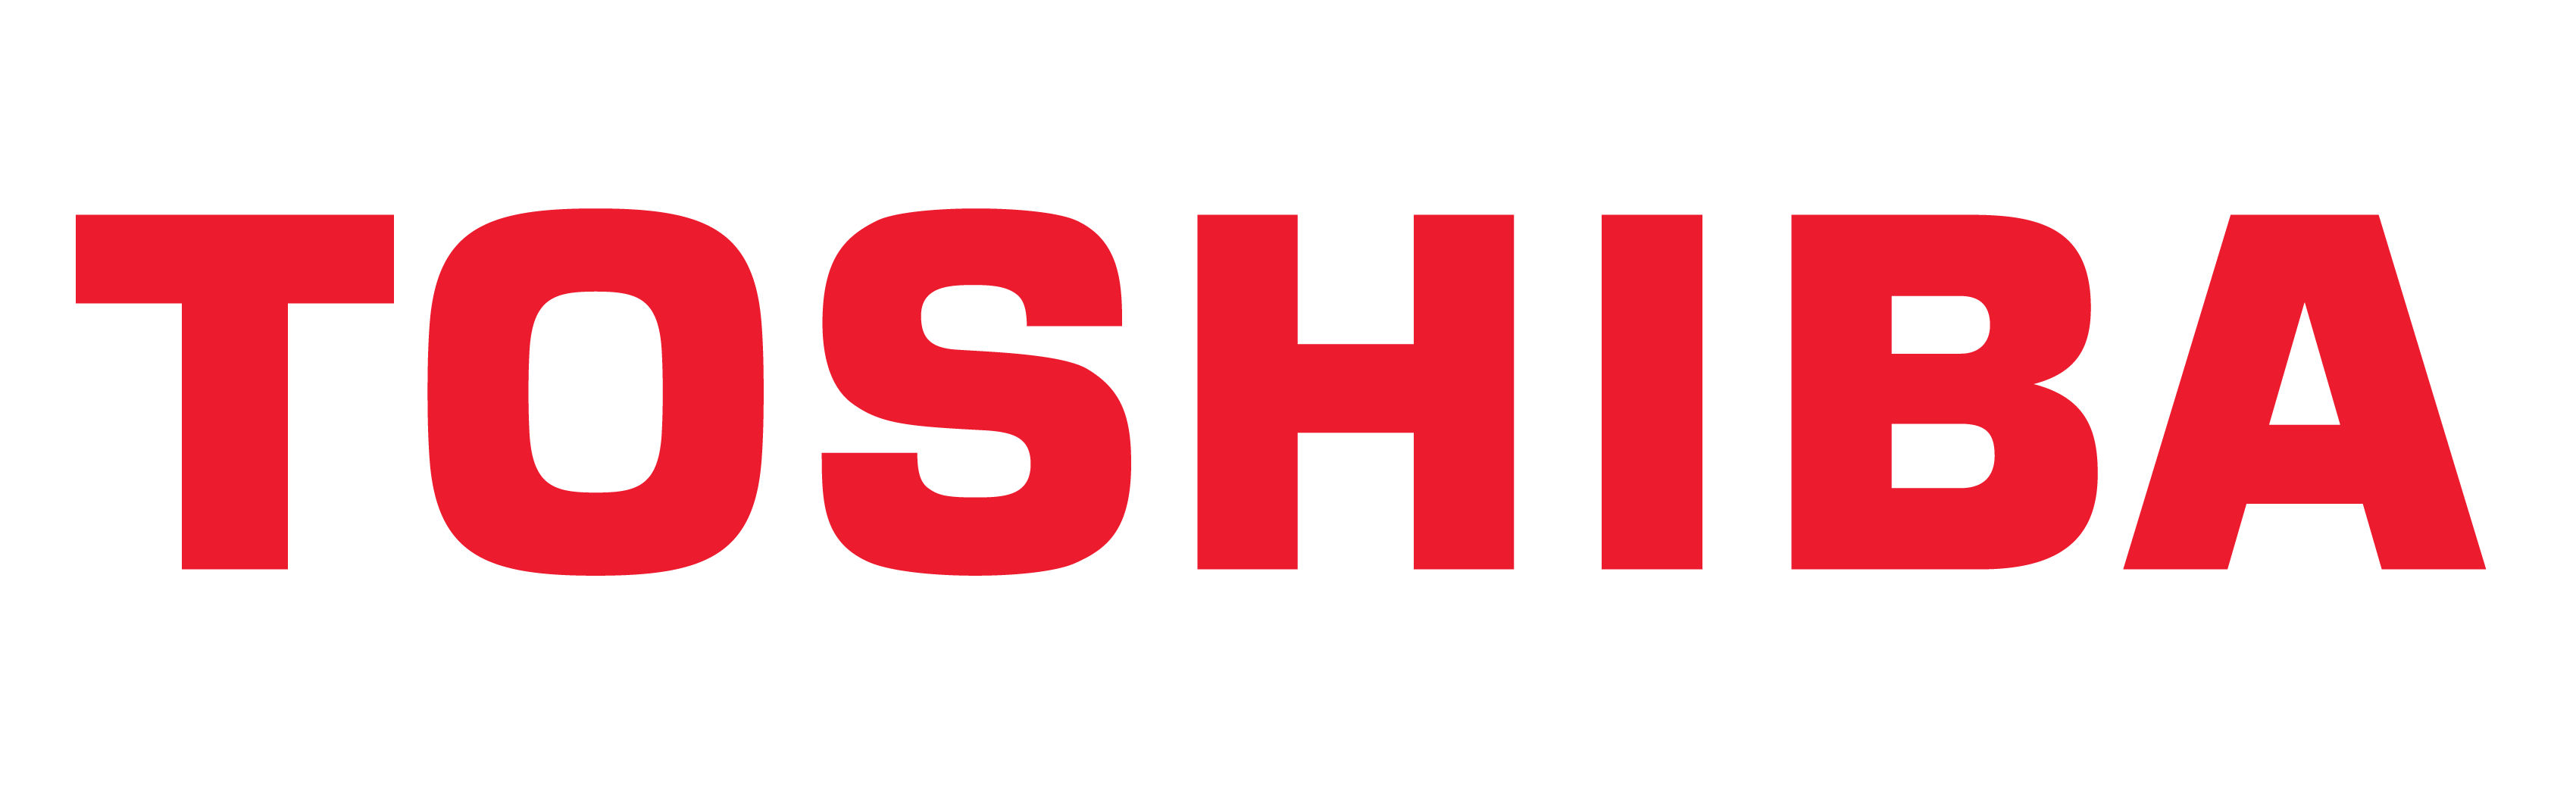 Logo Toshiba, simbol Toshiba, semnificație, istorie și evoluție